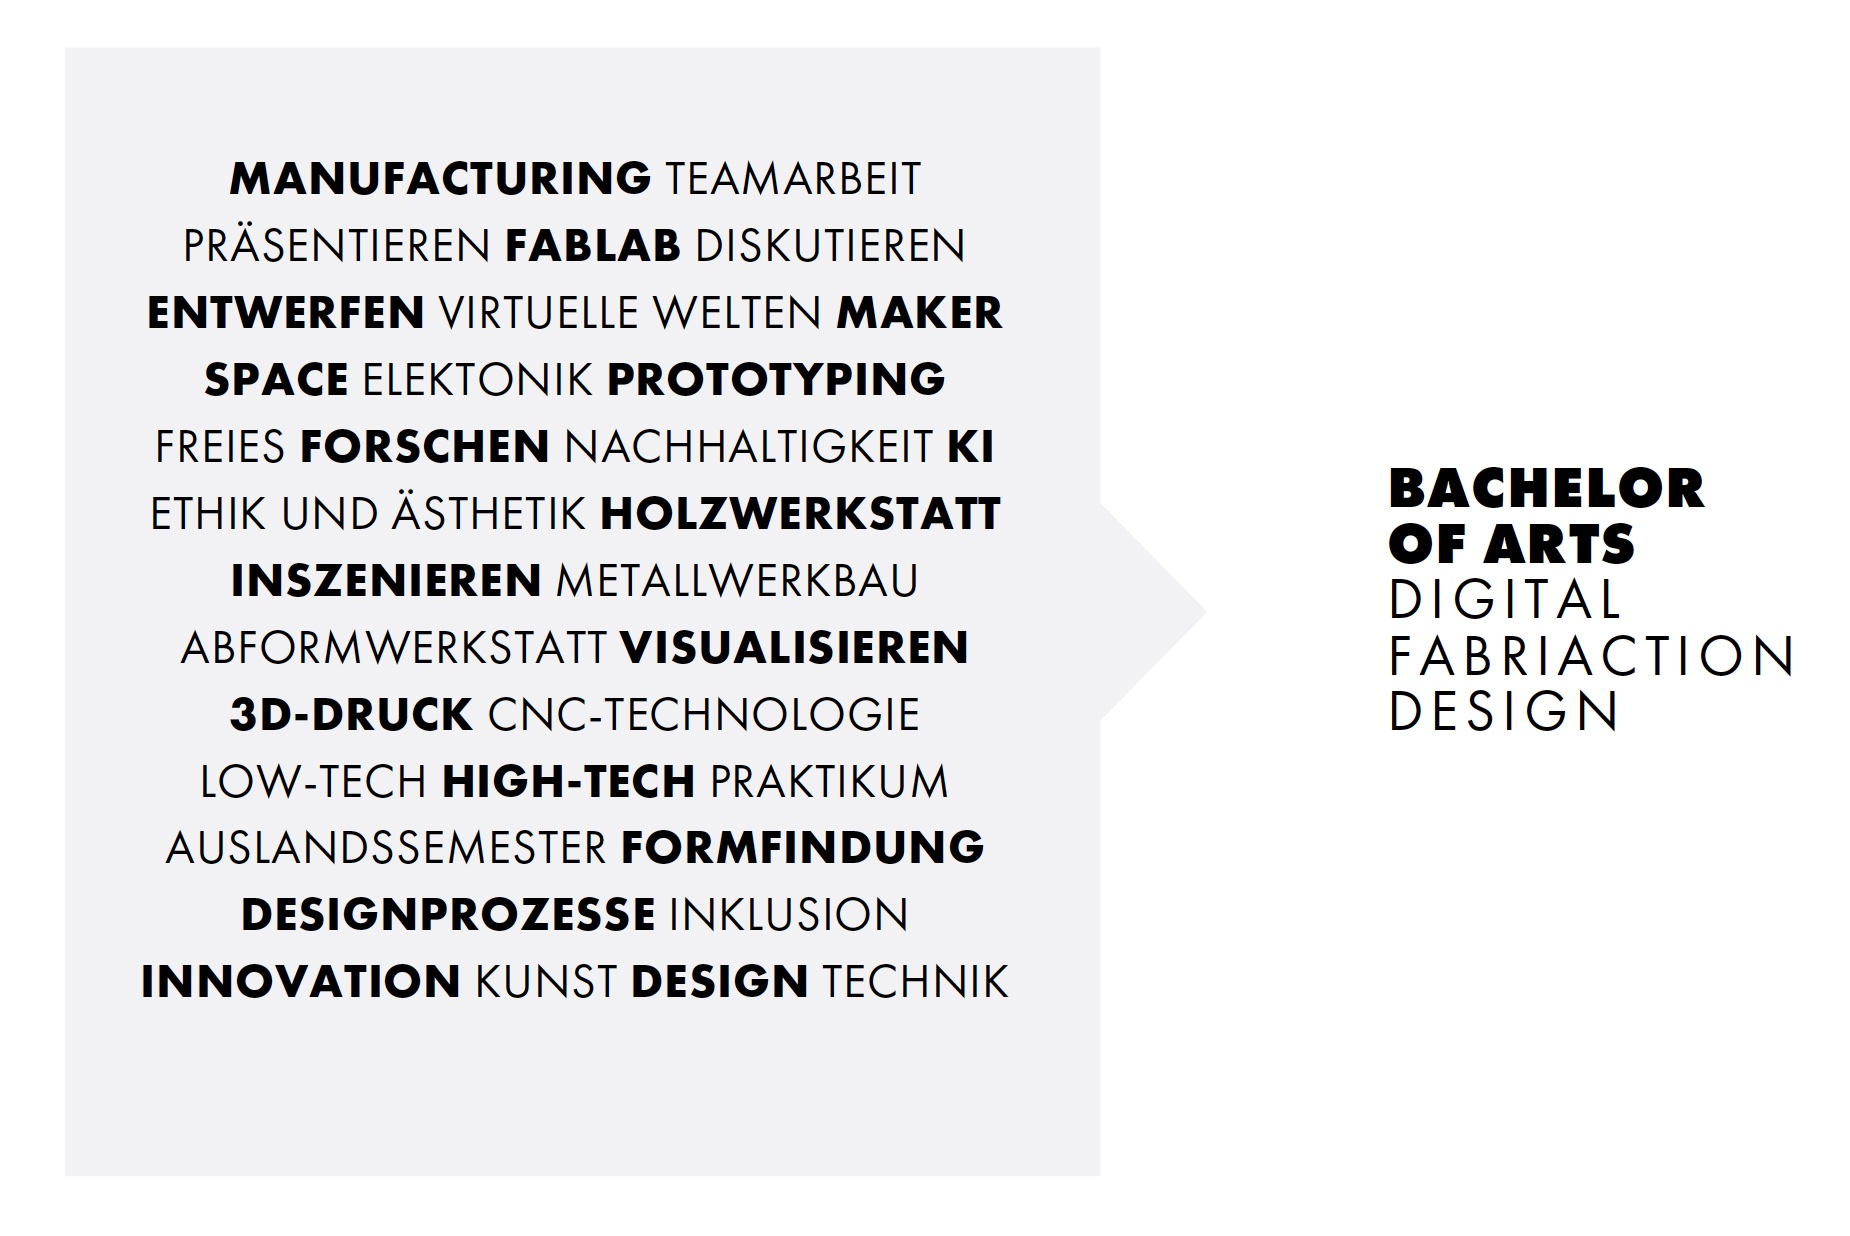 Digital Fabrication Design, HBK Essen